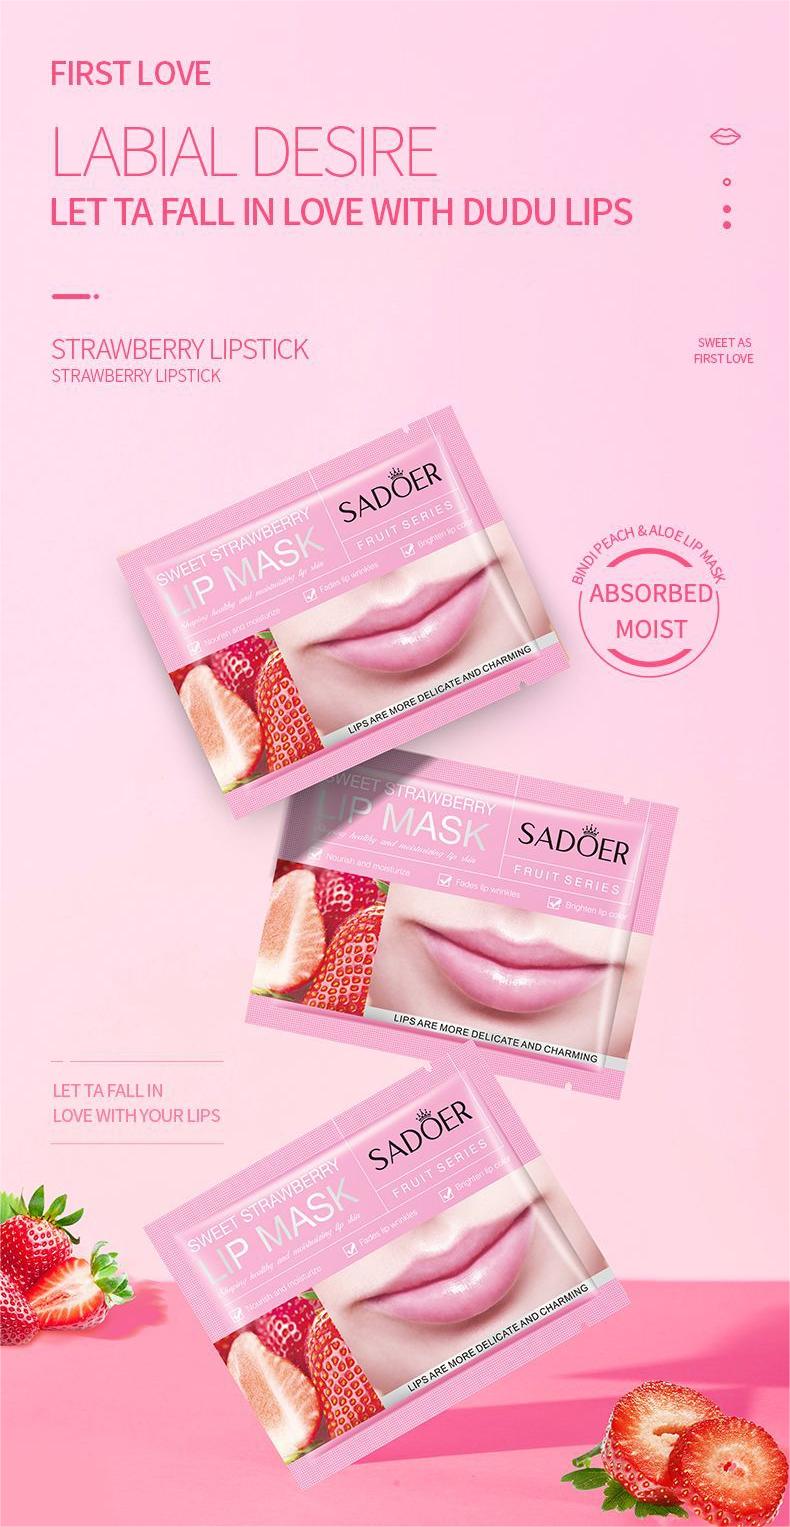 Wholesale Sweet Strawberry Nourish and Moisturize Lip Mask, Fade Lip Wrinkles, Brighten Lip Color 551